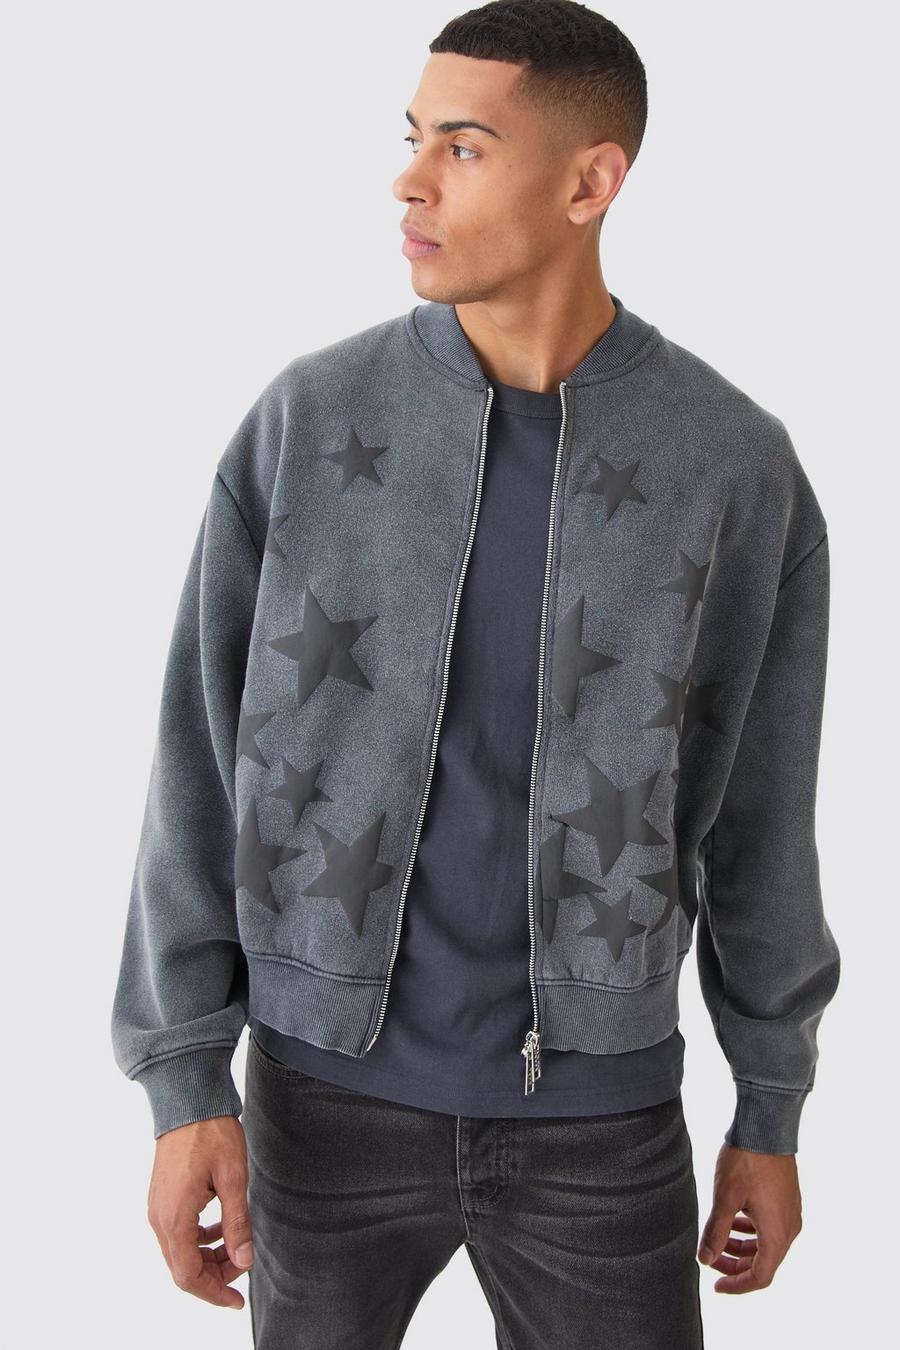 Charcoal Oversized Boxy Acid Wash Star Applique Jersey Bomber Jacket